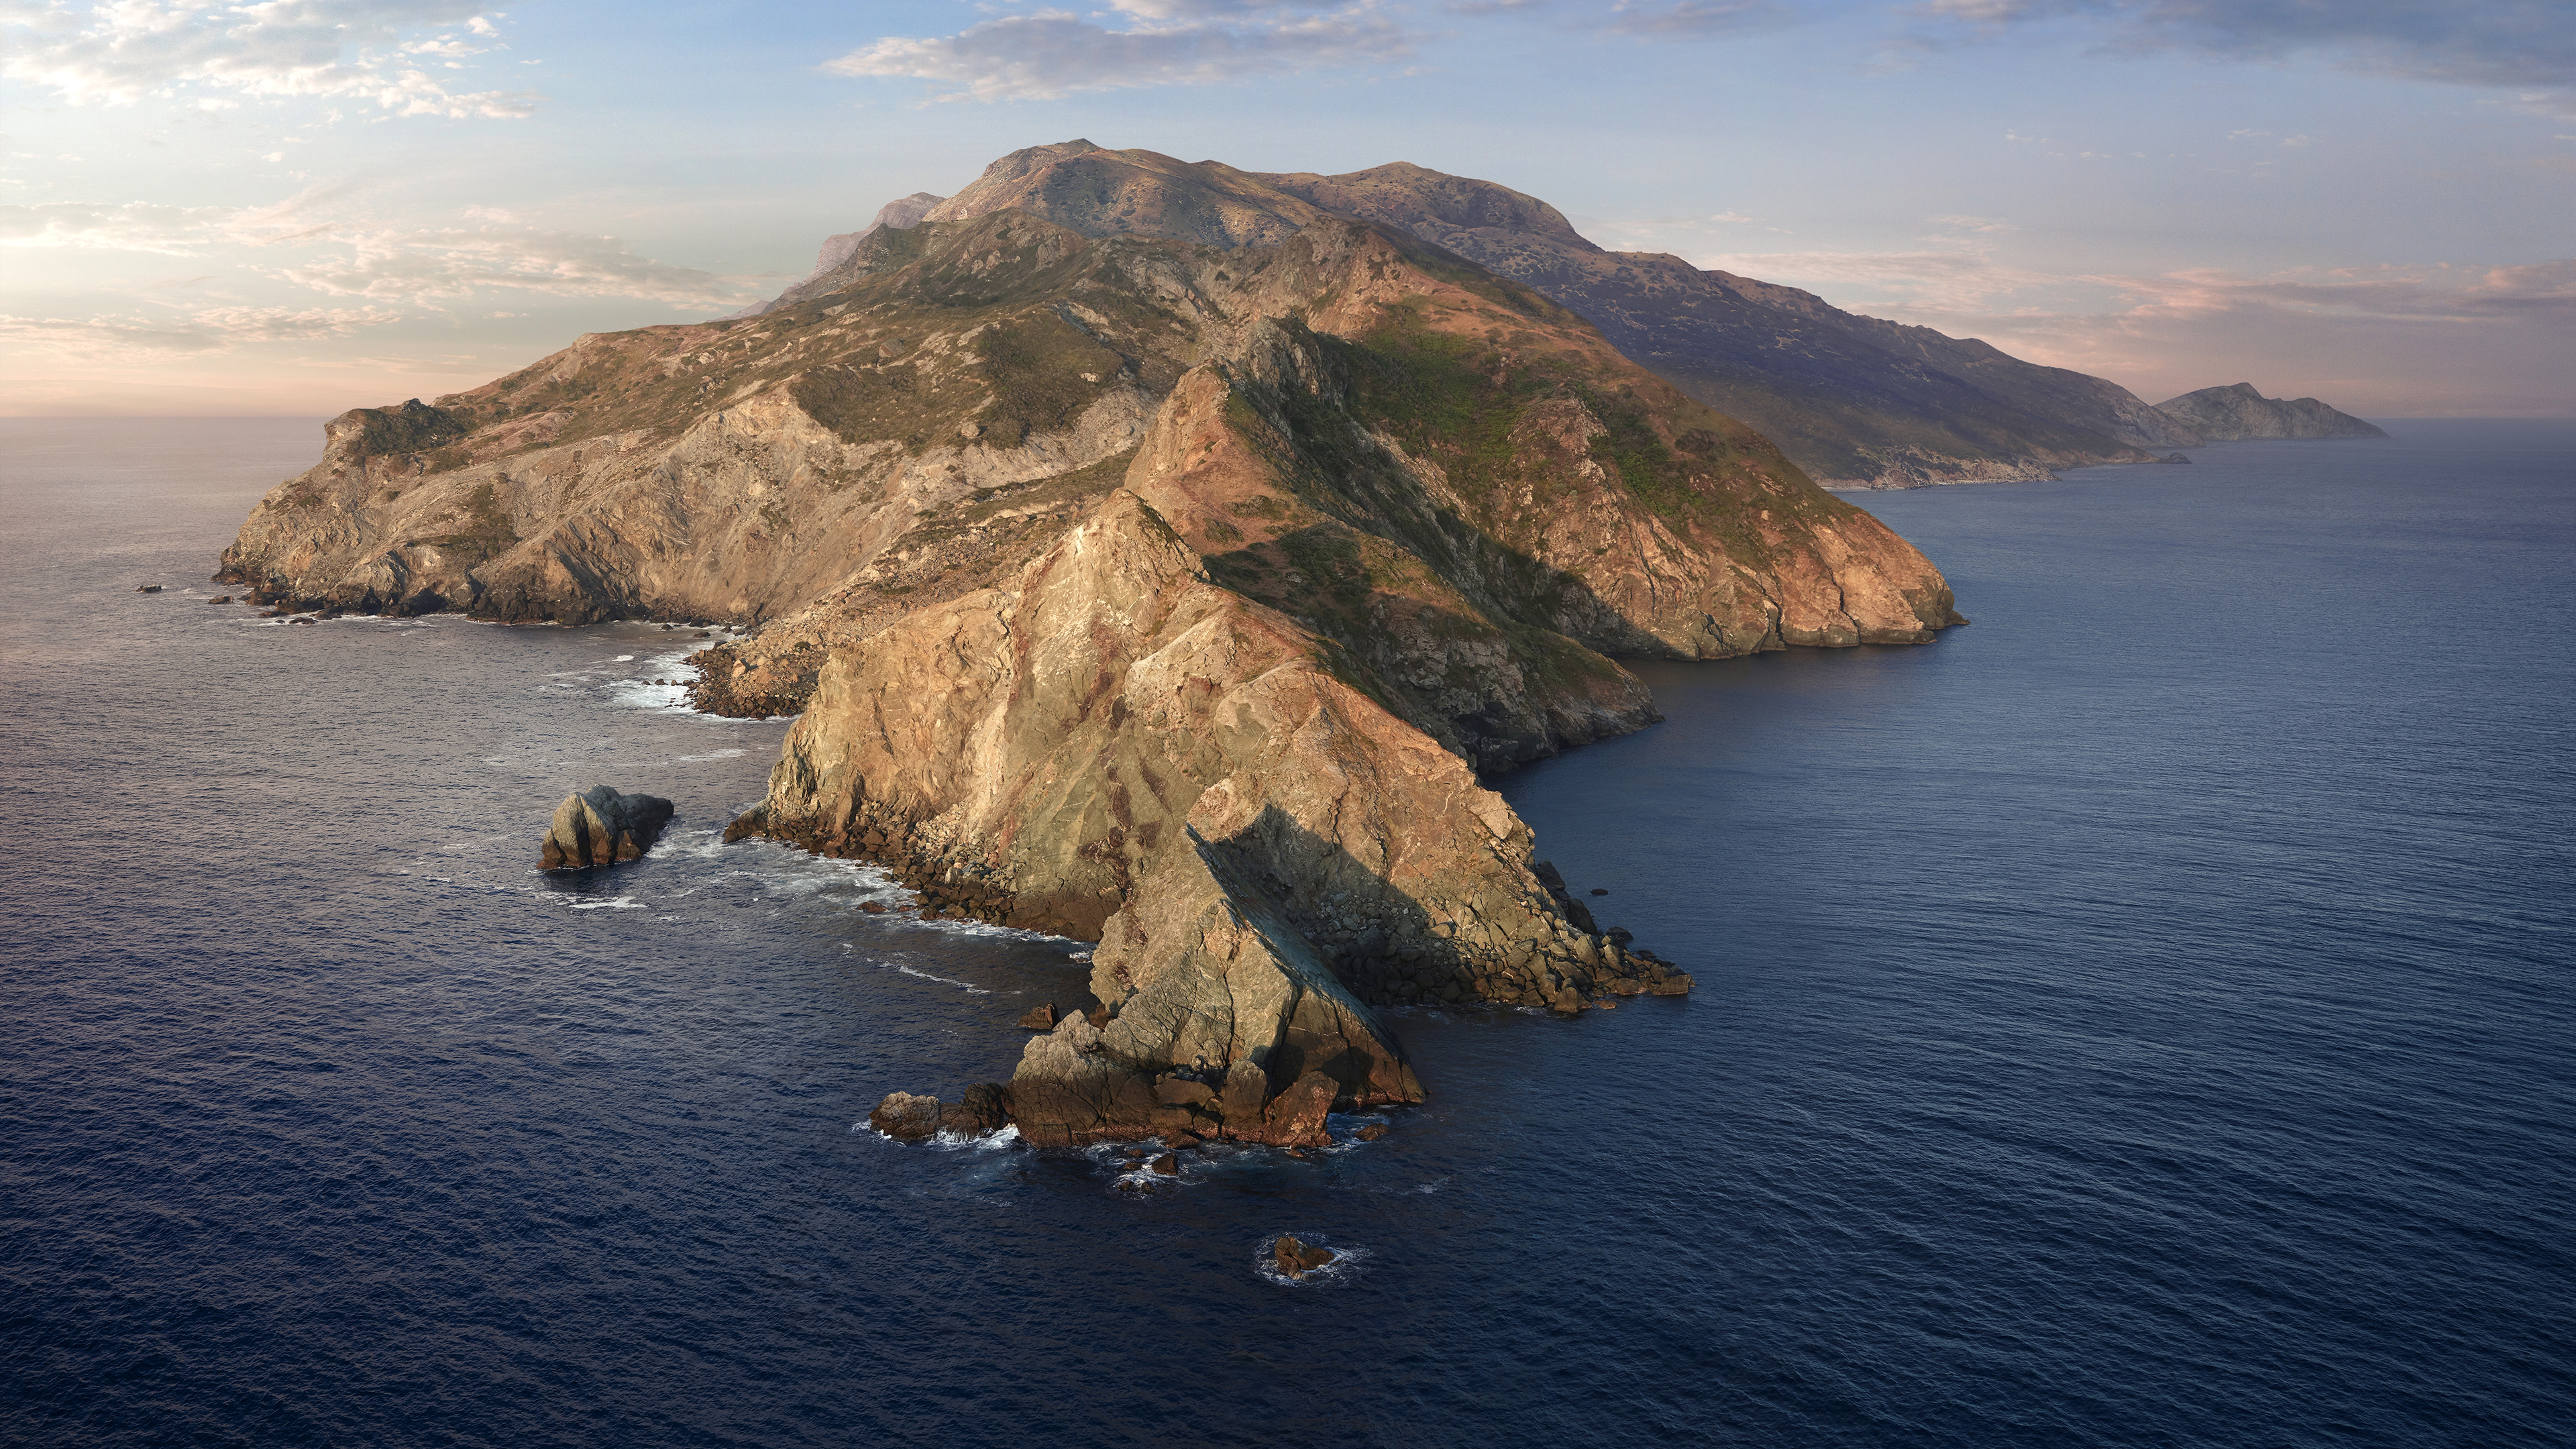 macOS Catalina, Mountains, Island, Morning, 4k Free deskk wallpaper, Ultra HD